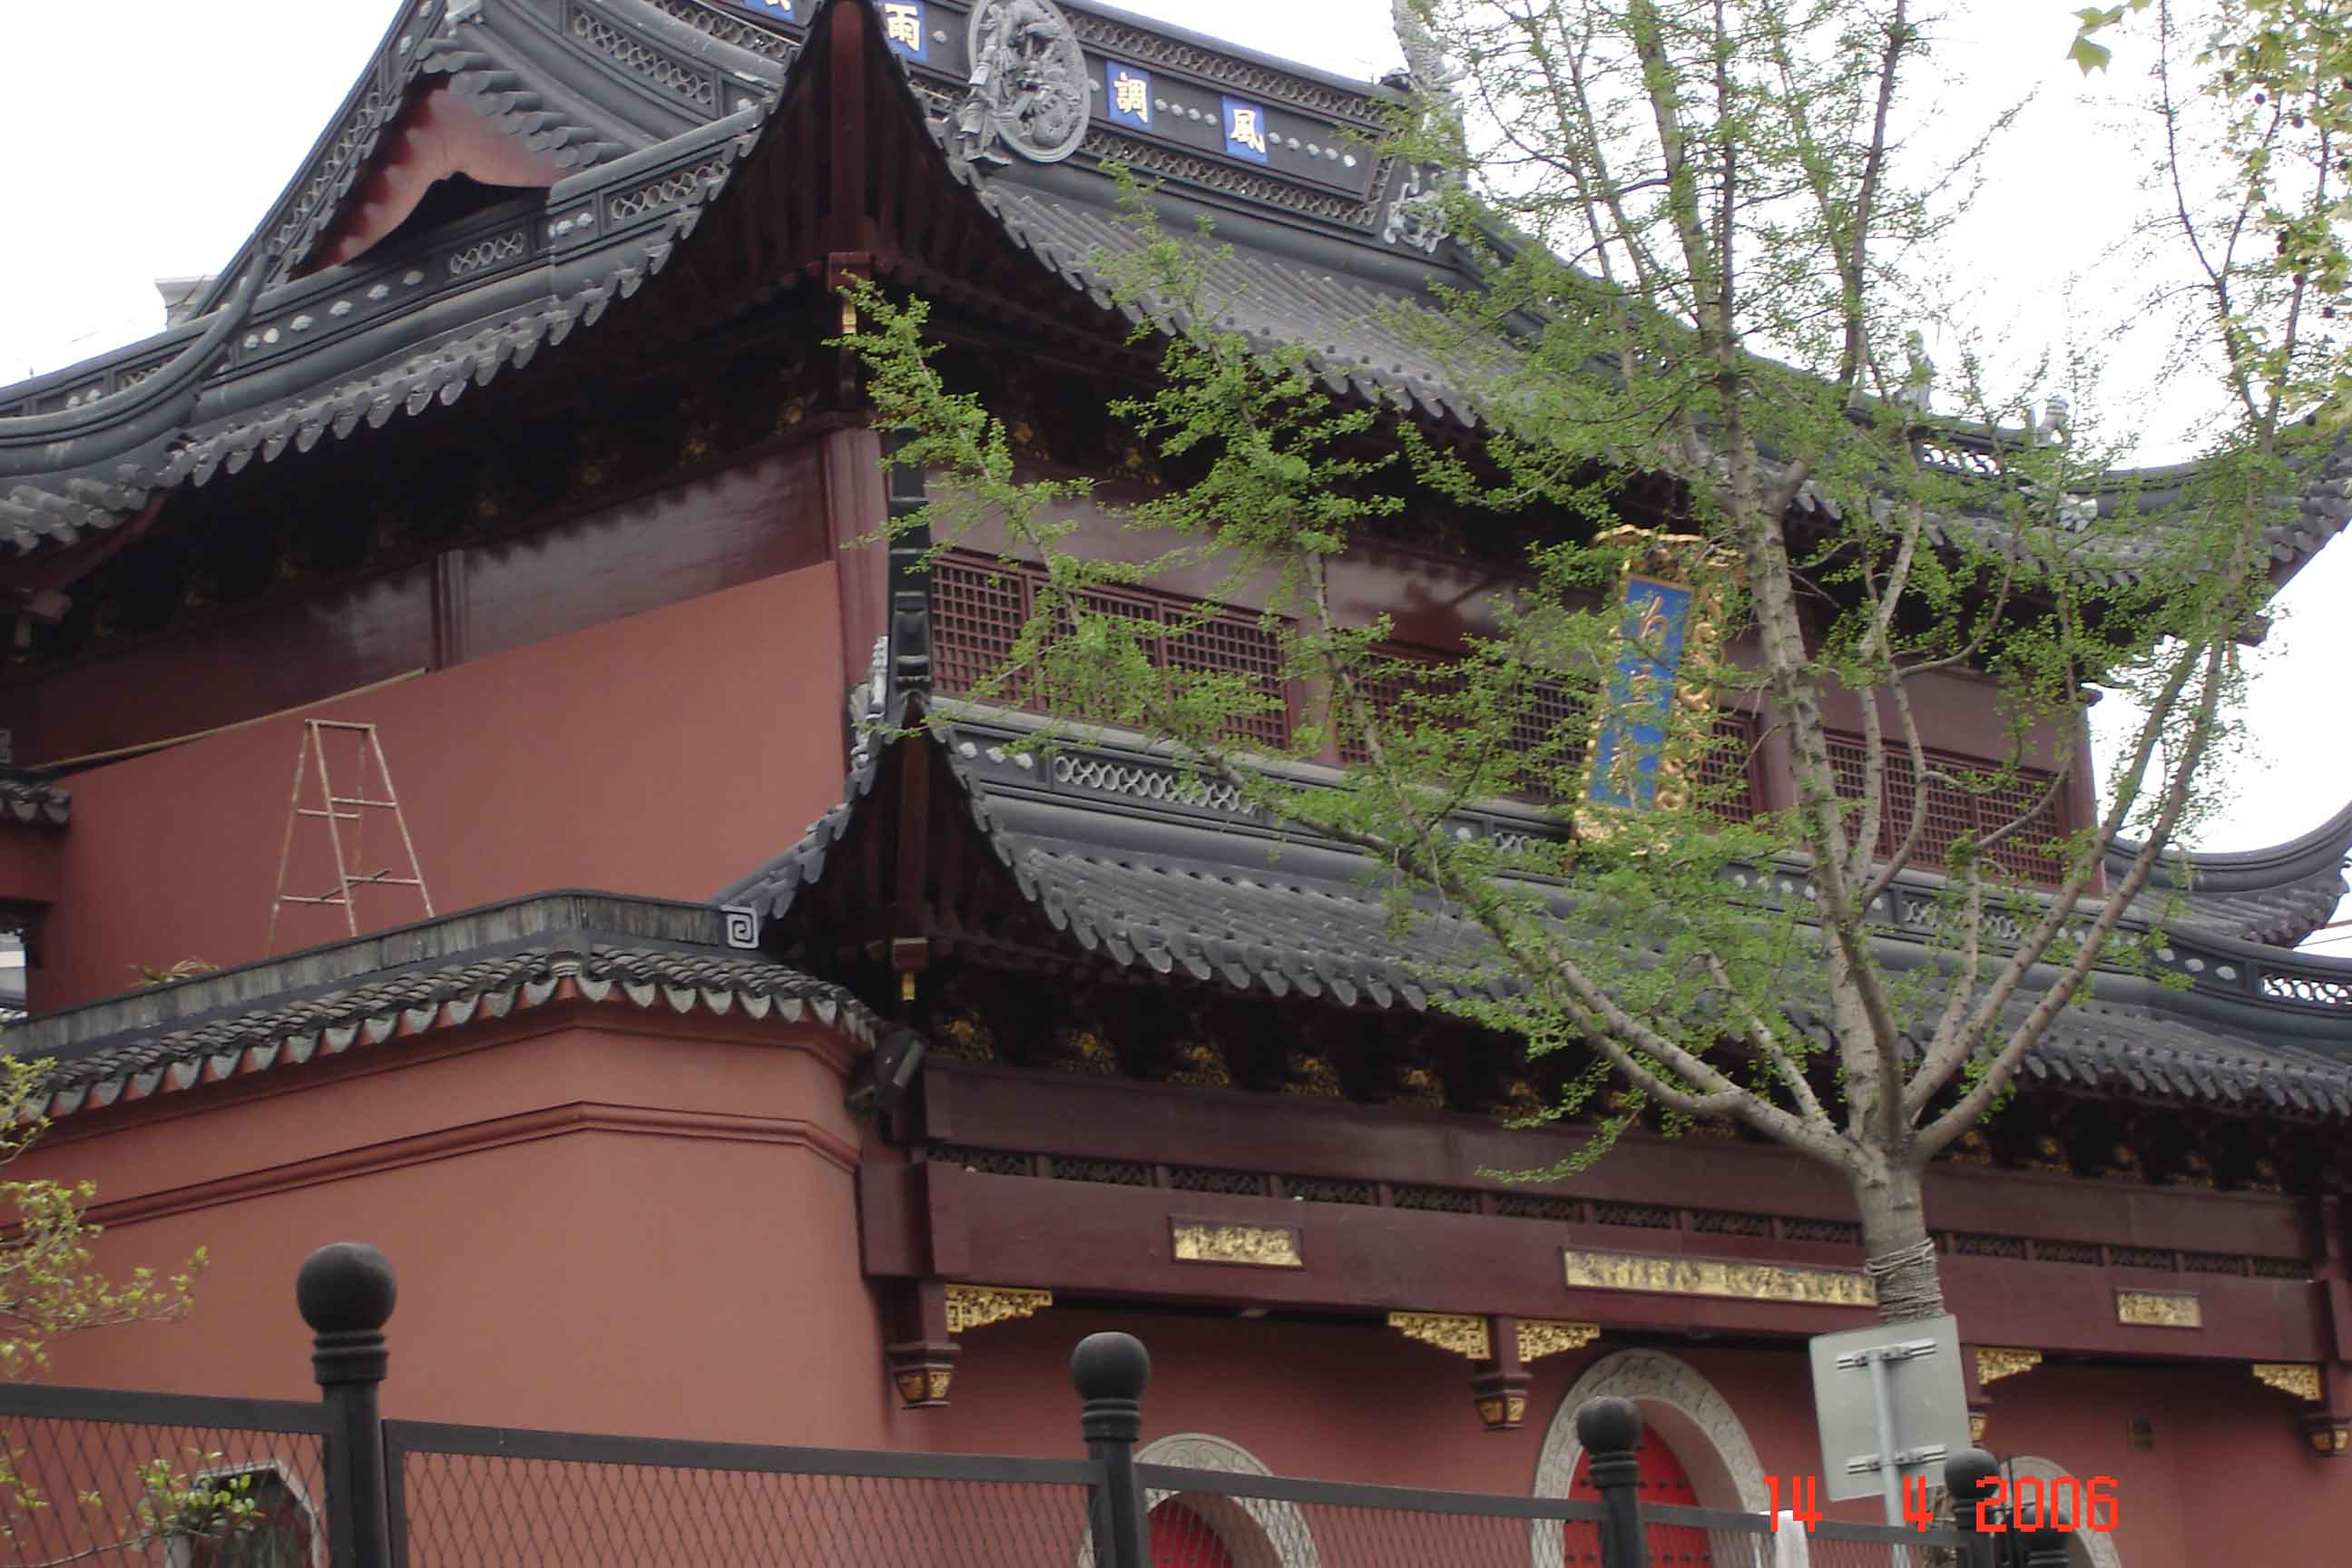 Dajing Ge Pavilion Museum - Old Chinese Quarter Old Town- Shanghai